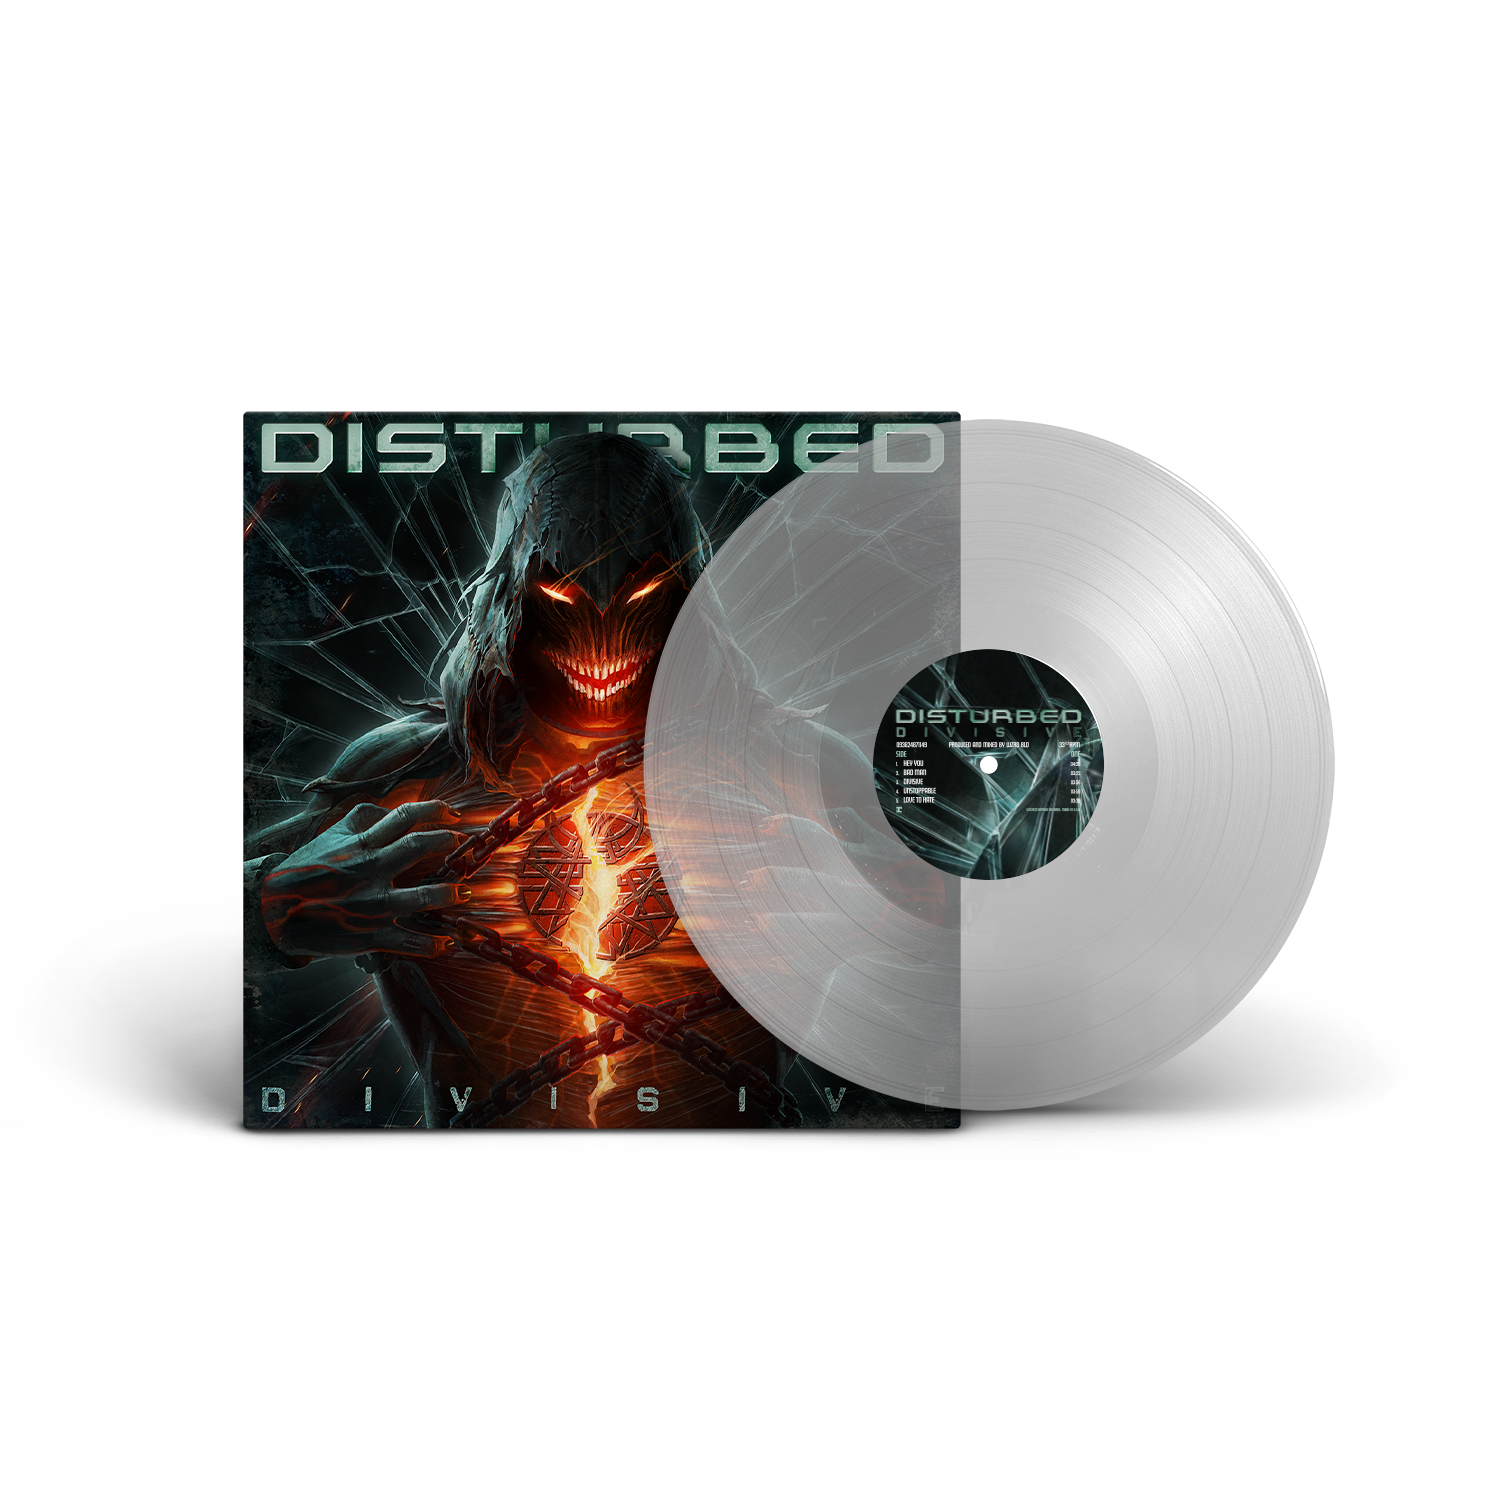 Disturbed Divisive Lp Limited Edition Clear Vinyl